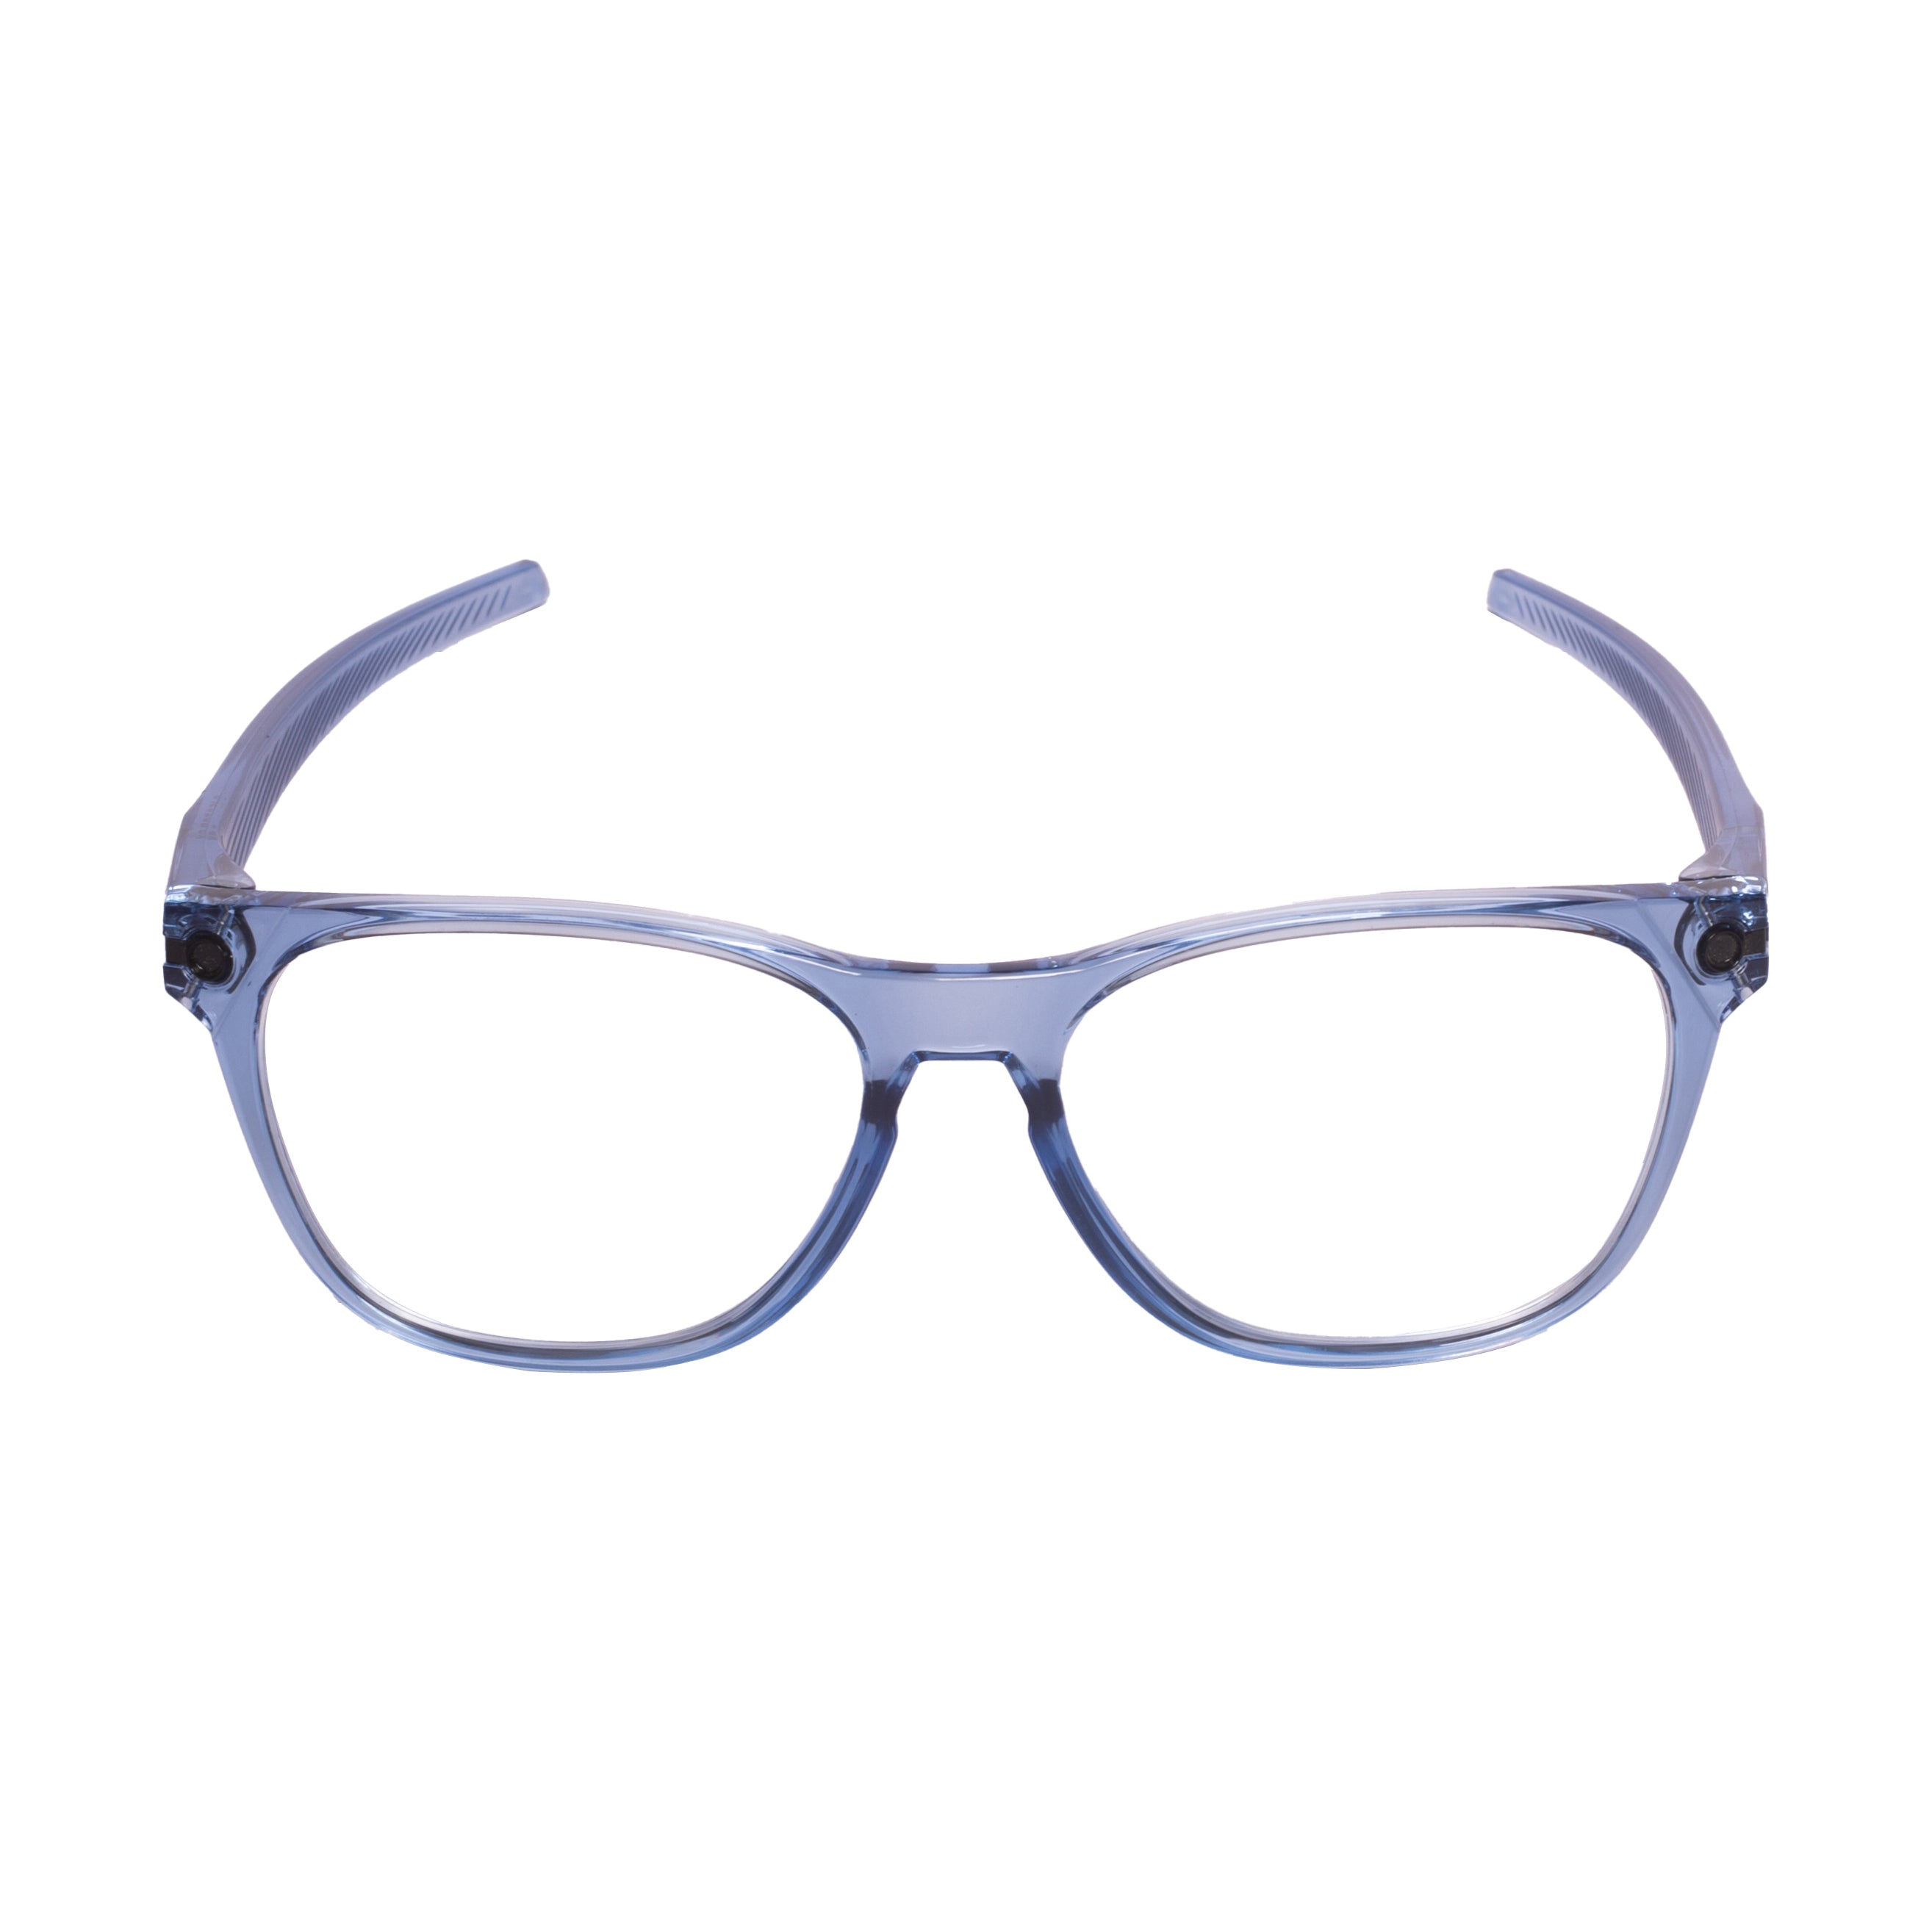 Oakley-OX8177-54-817706 Eyeglasses - Premium Eyeglasses from Oakley - Just Rs. 8390! Shop now at Laxmi Opticians